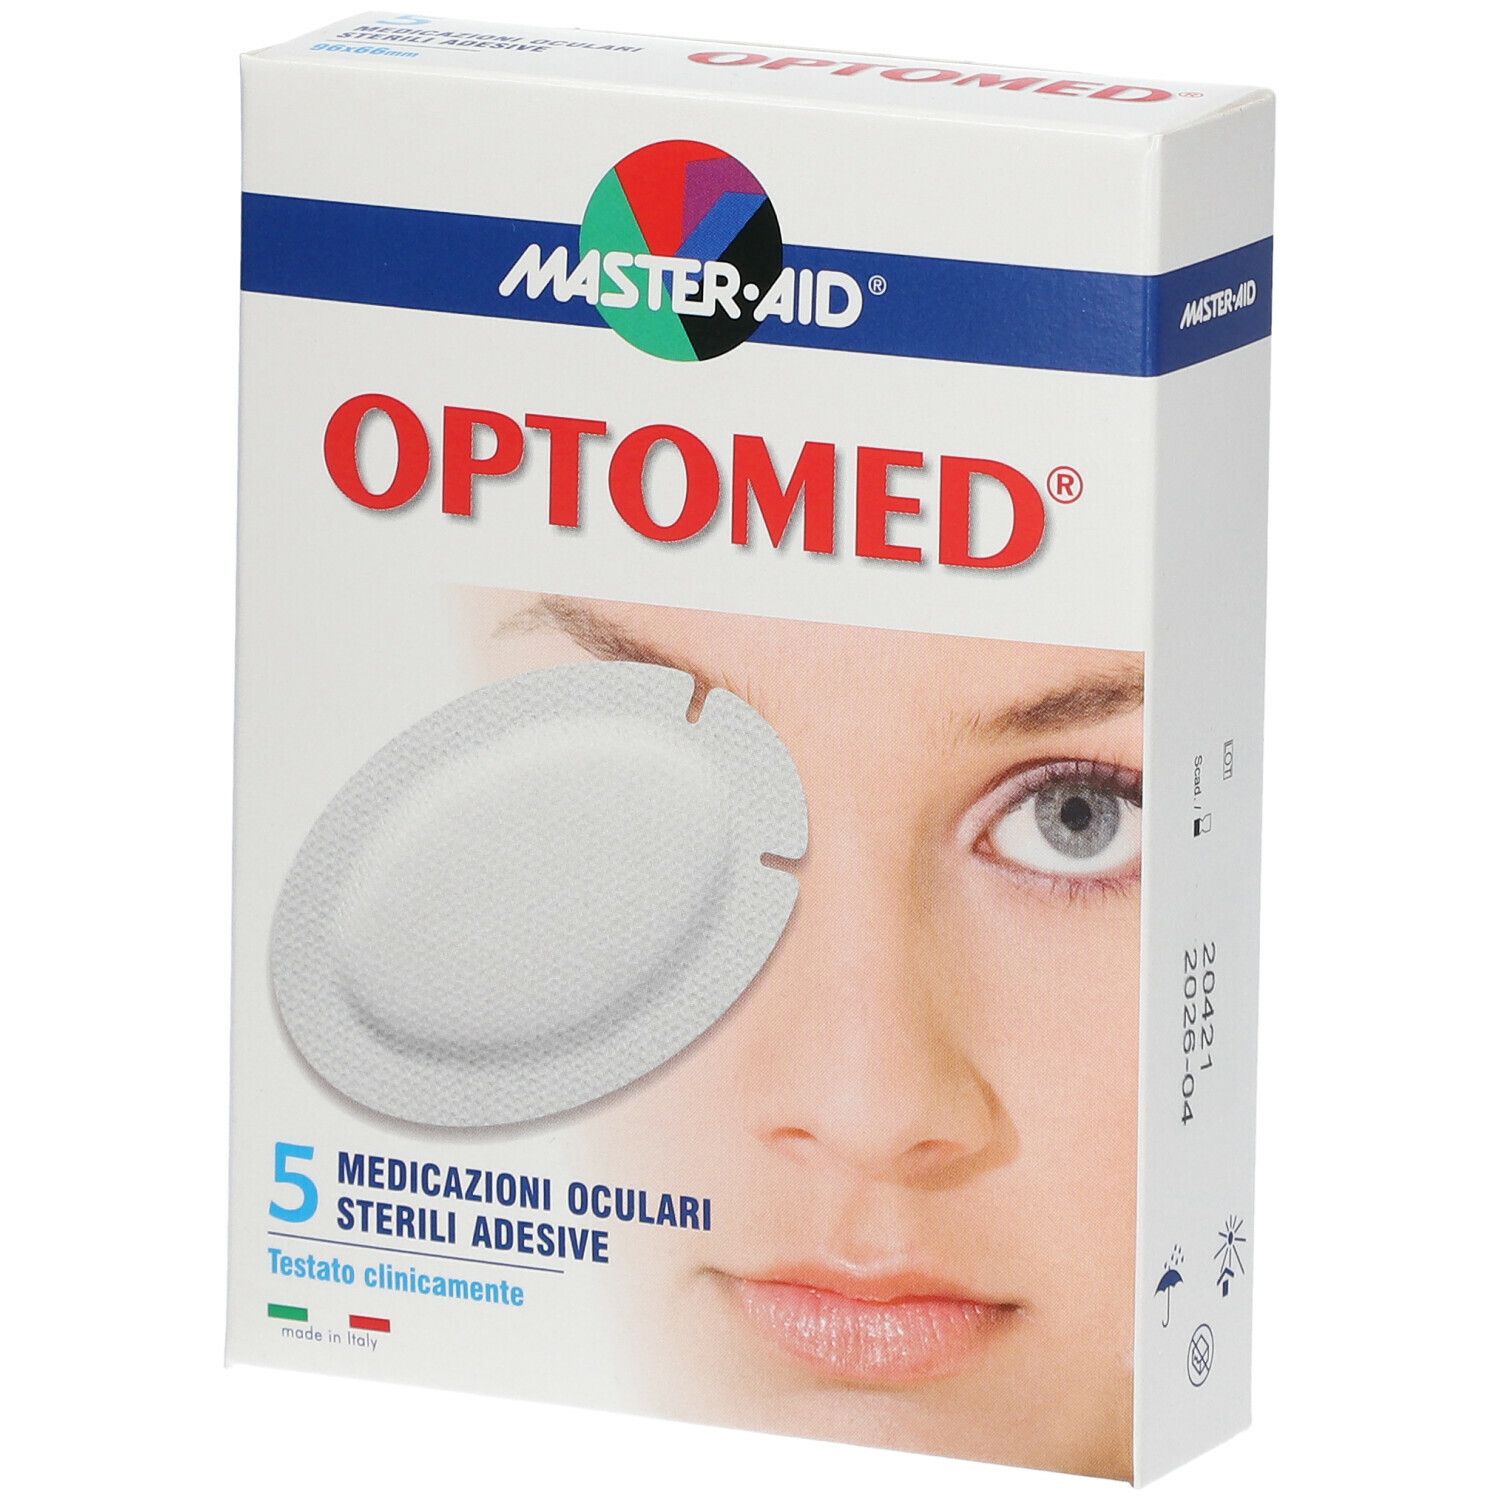 Master Aid® Optomed® Medicazioni Oculari